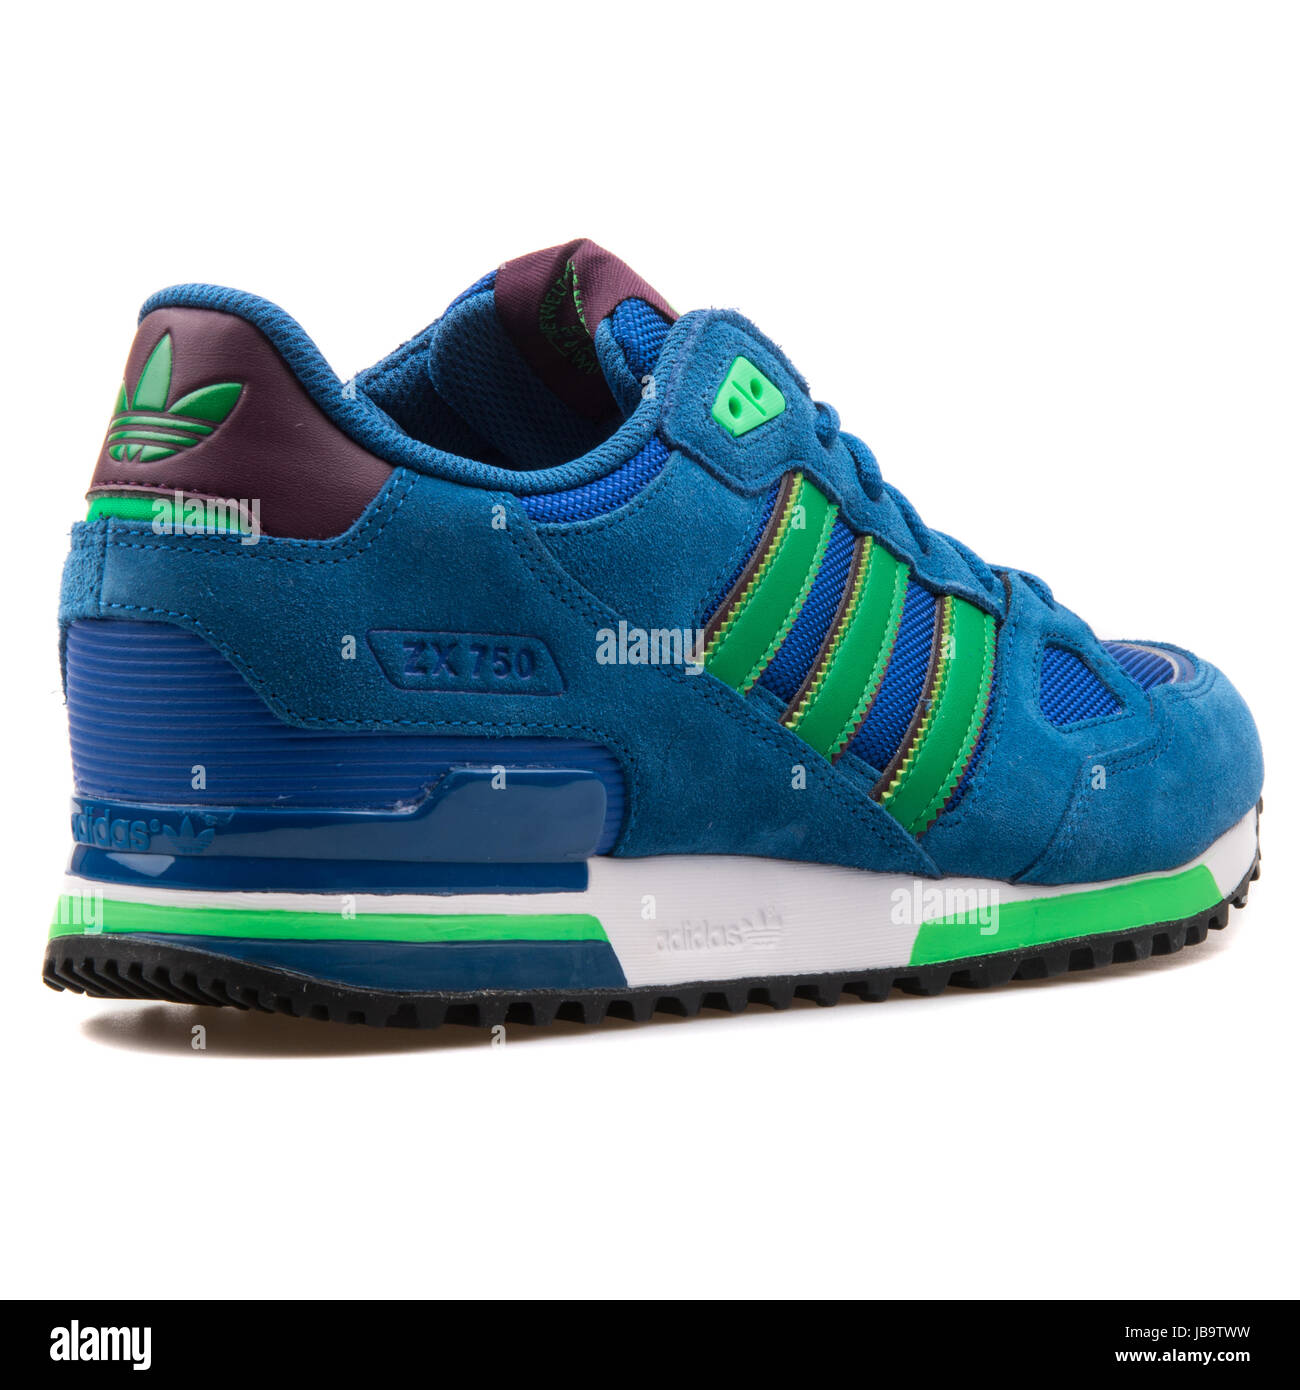 adidas zx 750 blue